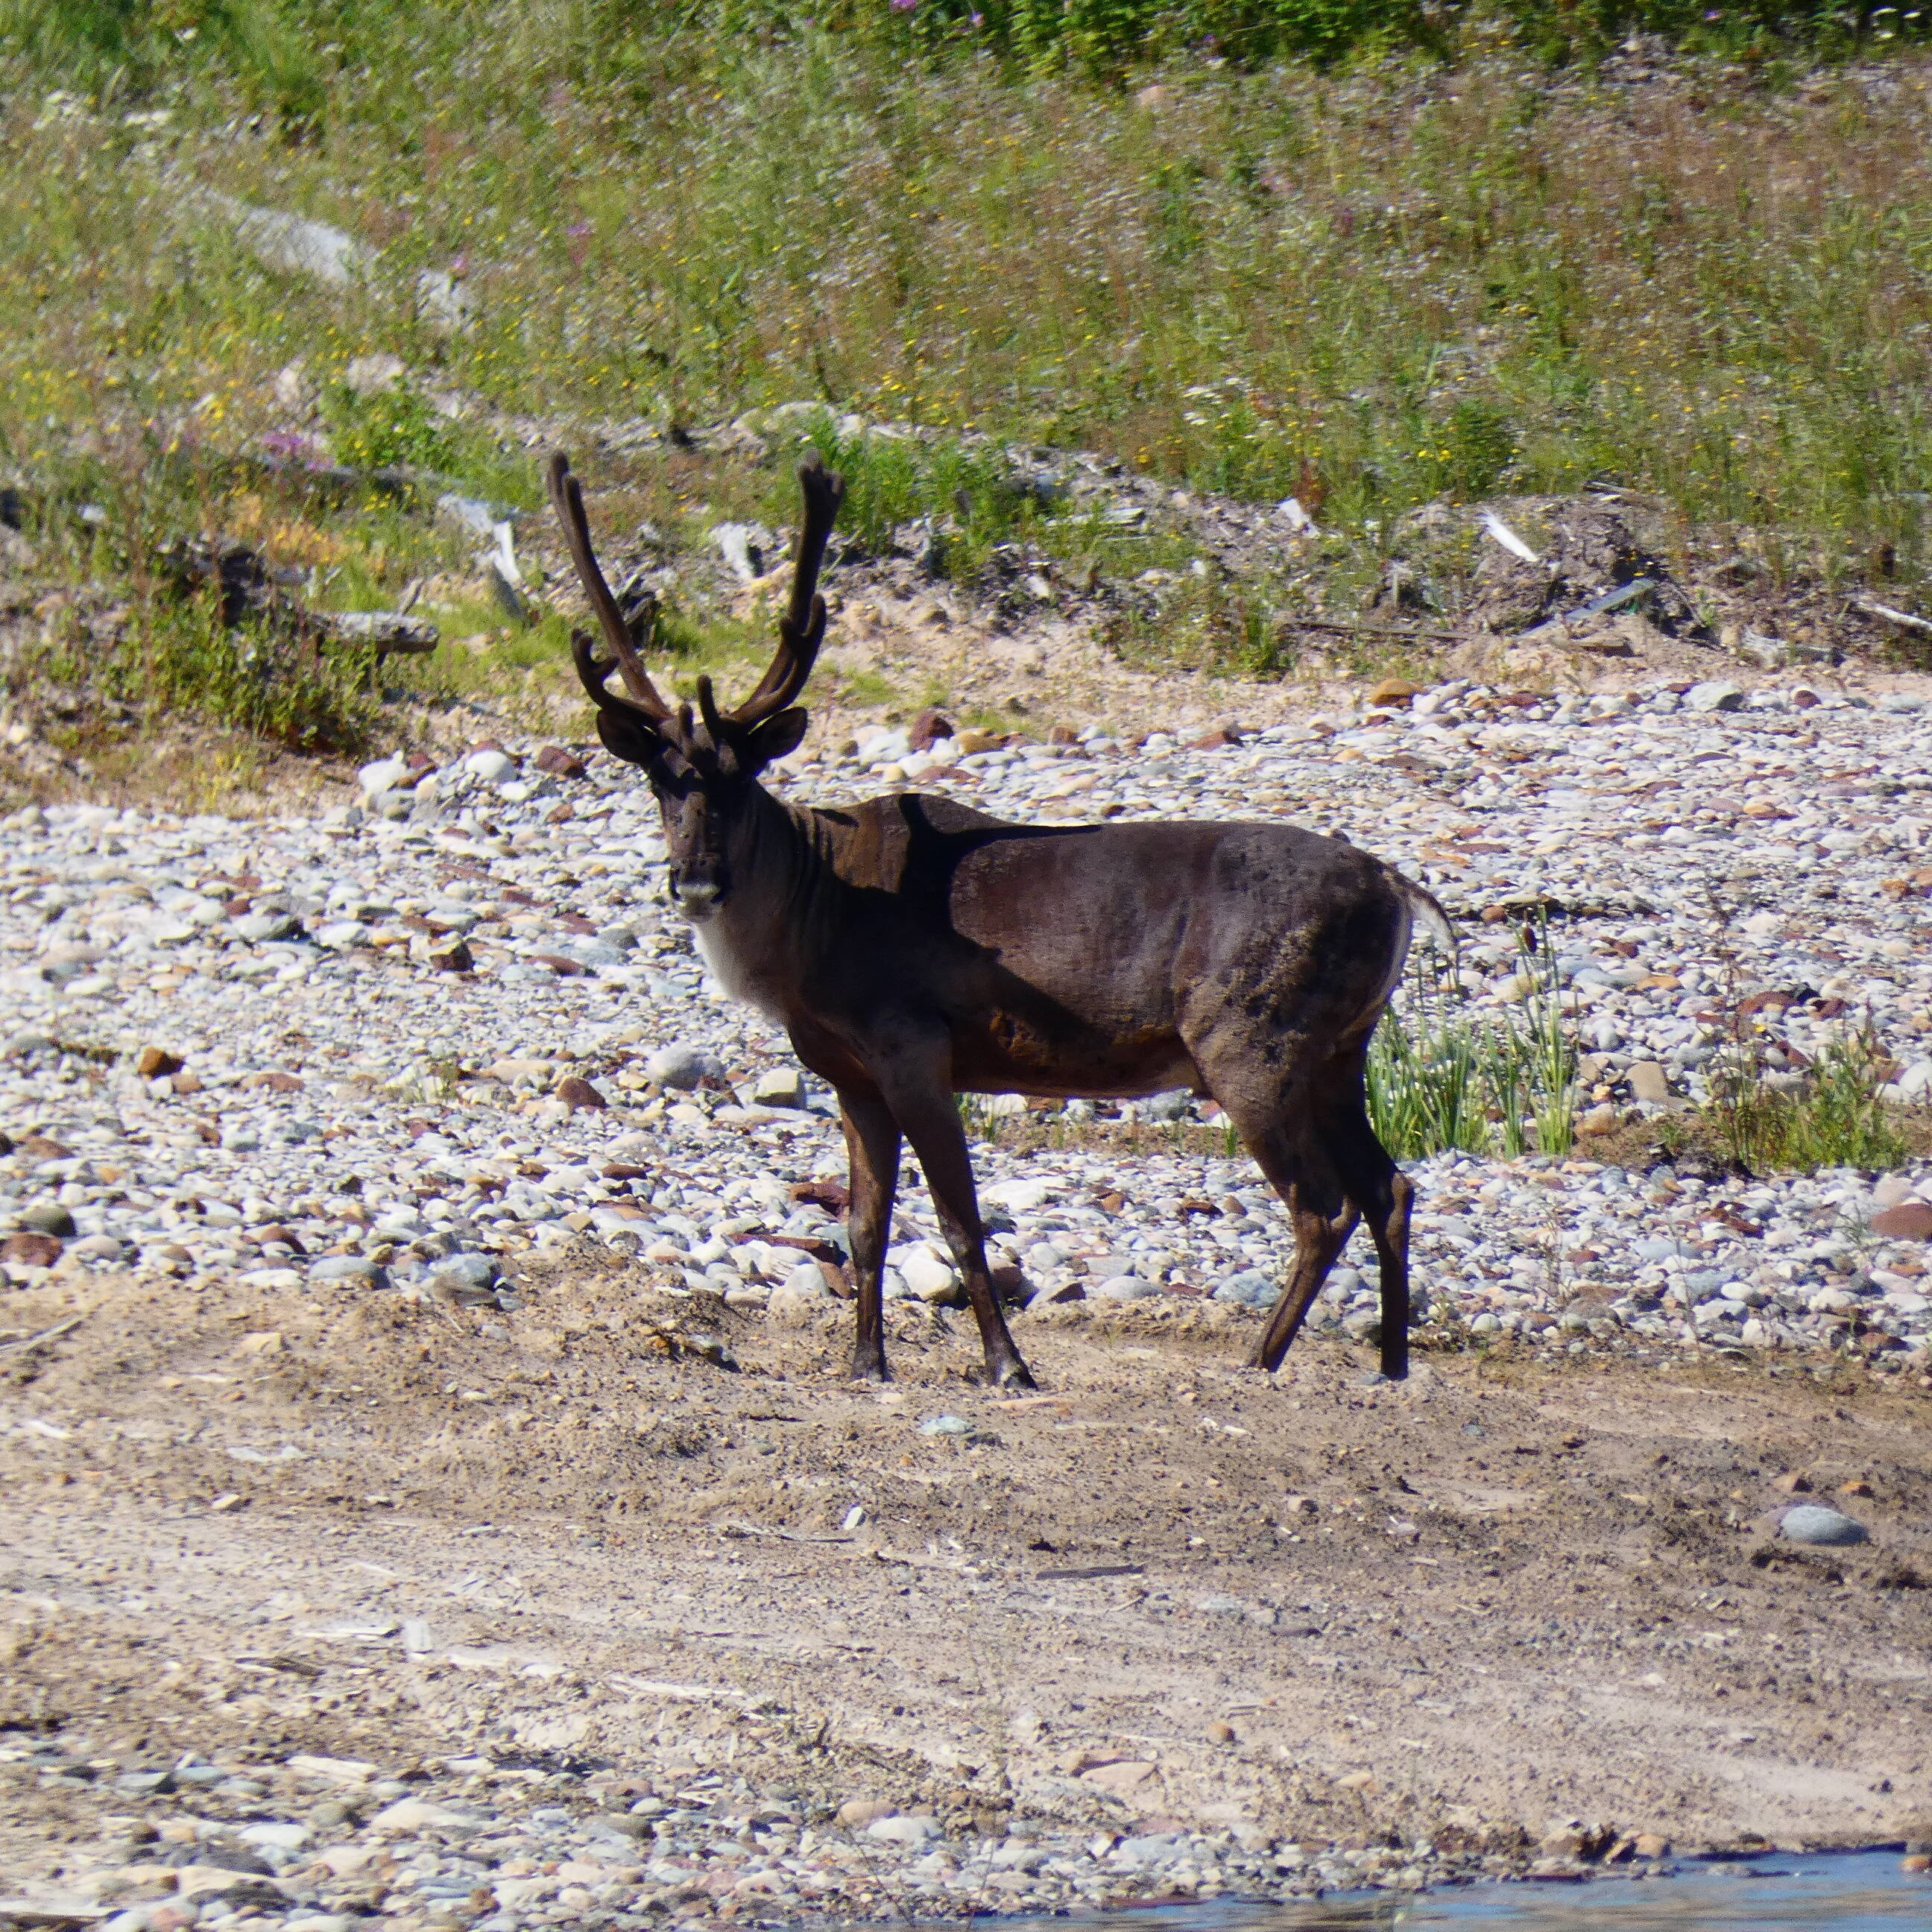 caribou standing on rocky, hillside